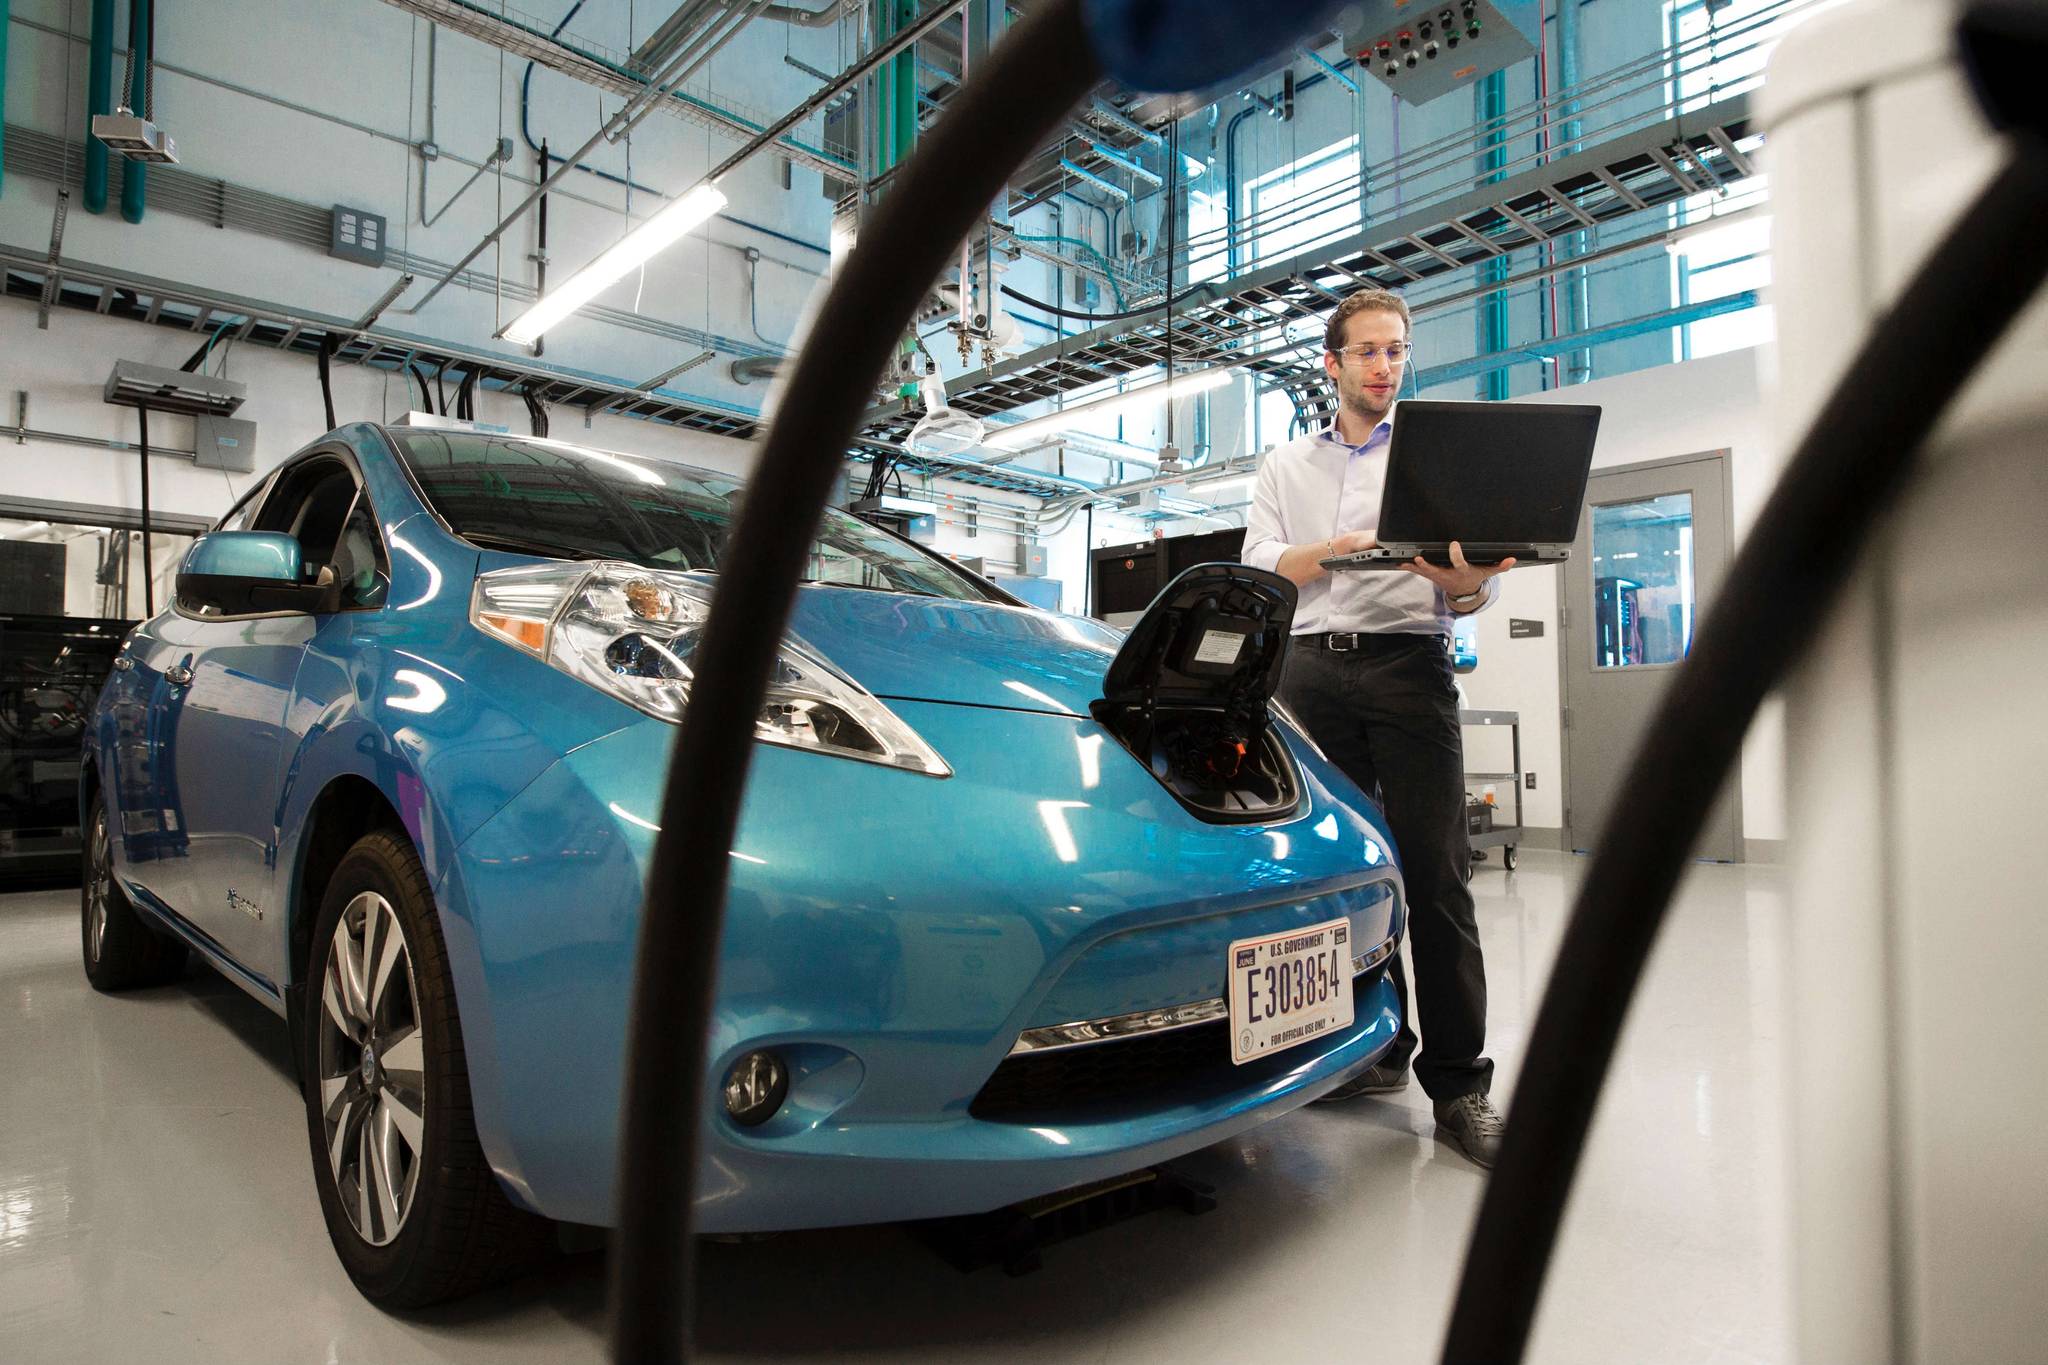 Electric car sales triple as Aussies aim for green future